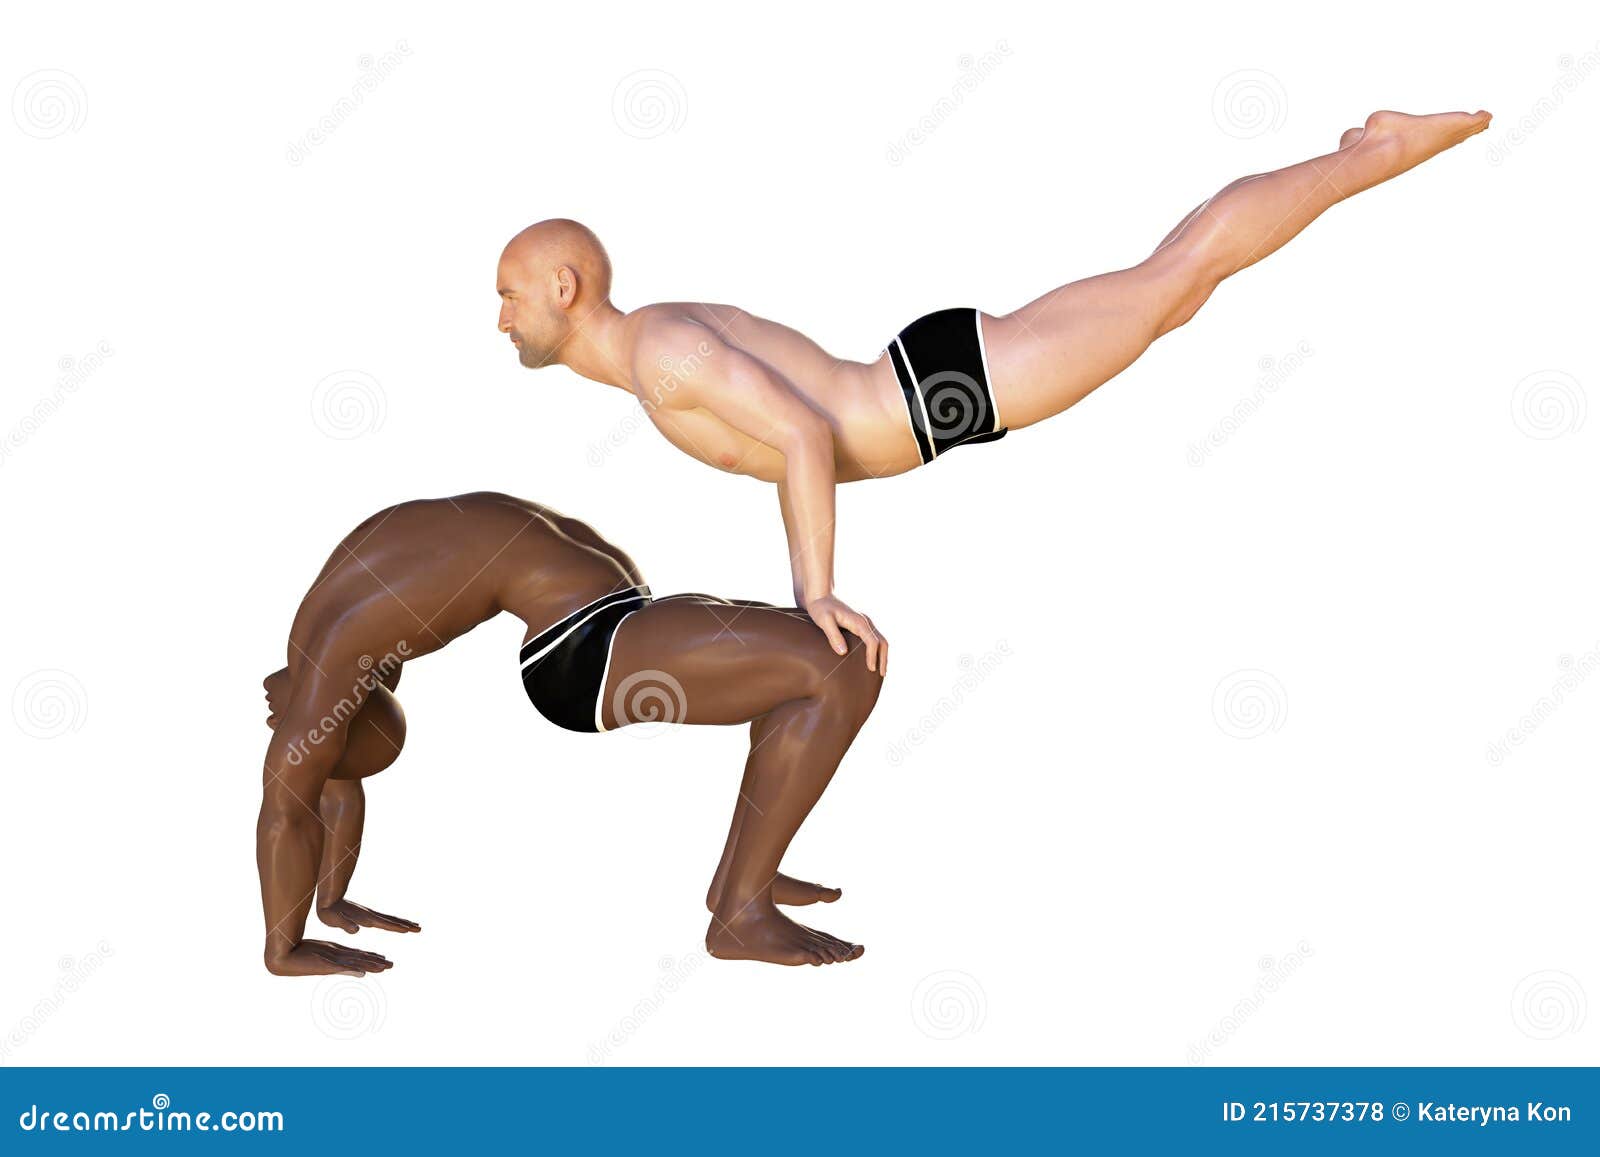 https://thumbs.dreamstime.com/z/advanced-partner-yoga-pose-couples-yoga-d-illustration-advanced-partner-yoga-pose-couples-yoga-d-illustration-showing-two-men-dark-215737378.jpg